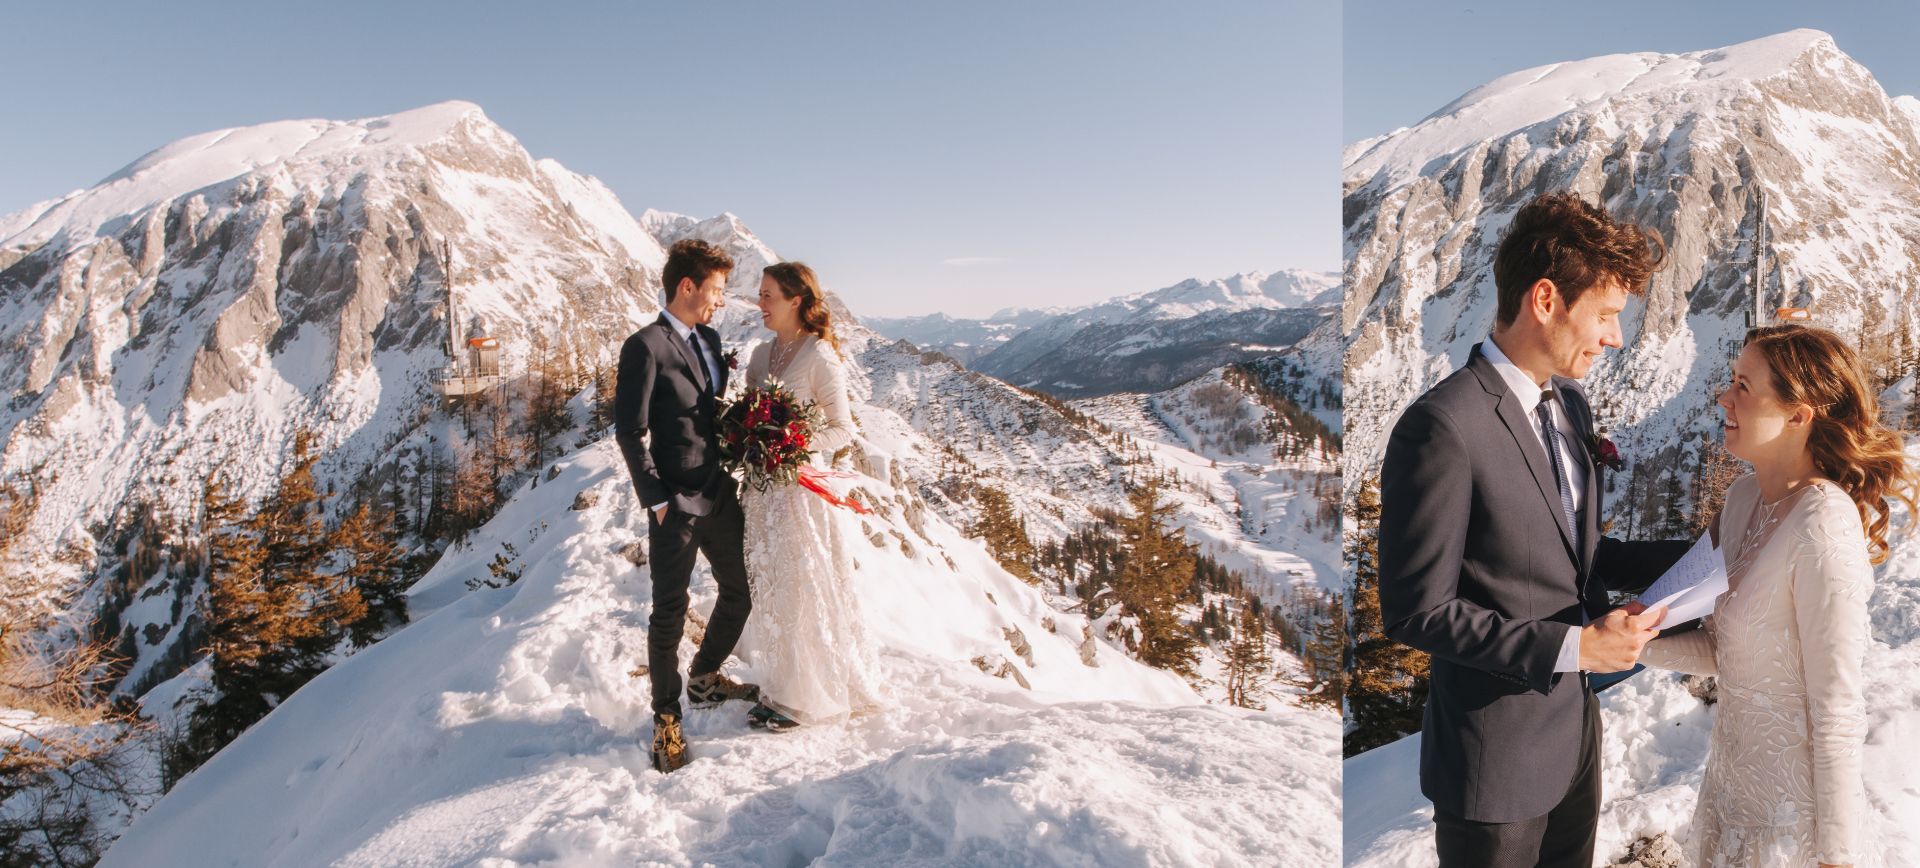 Mountain elopement germany - Sunrise adventure wedding ceremony in Alps near Koenigsee